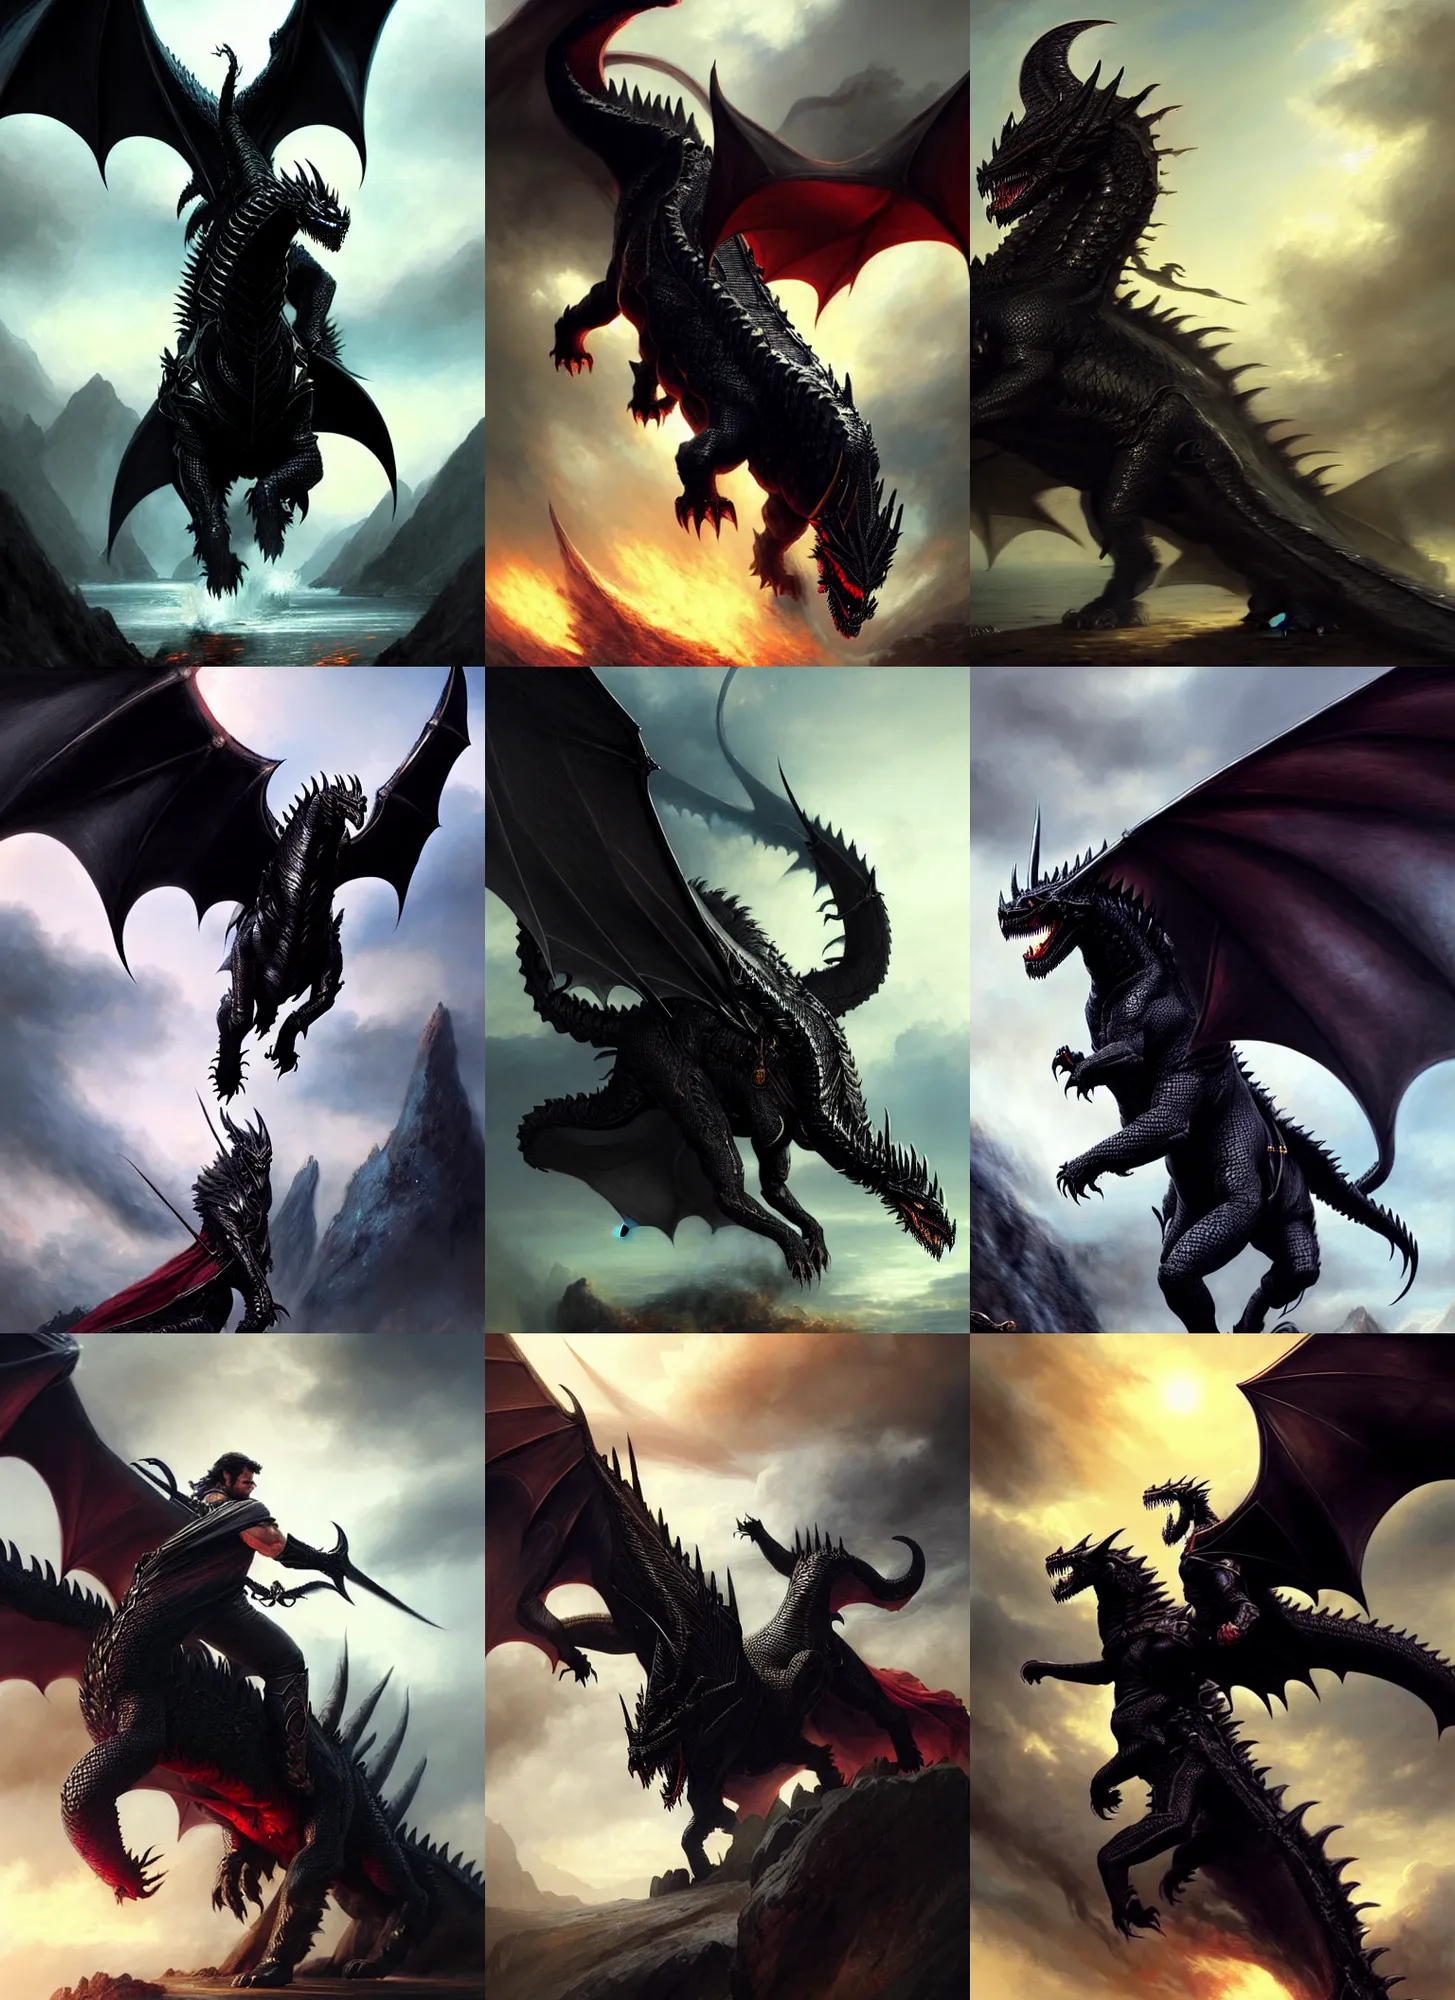 Prompt: Henry Cavill riding a massive black dragon, epic fantasy digital art by Eugene de Blaas and Ross Tran, vibrant color scheme, intricate detail, cinematic, artstation, Greg rutkowski, Artgerm